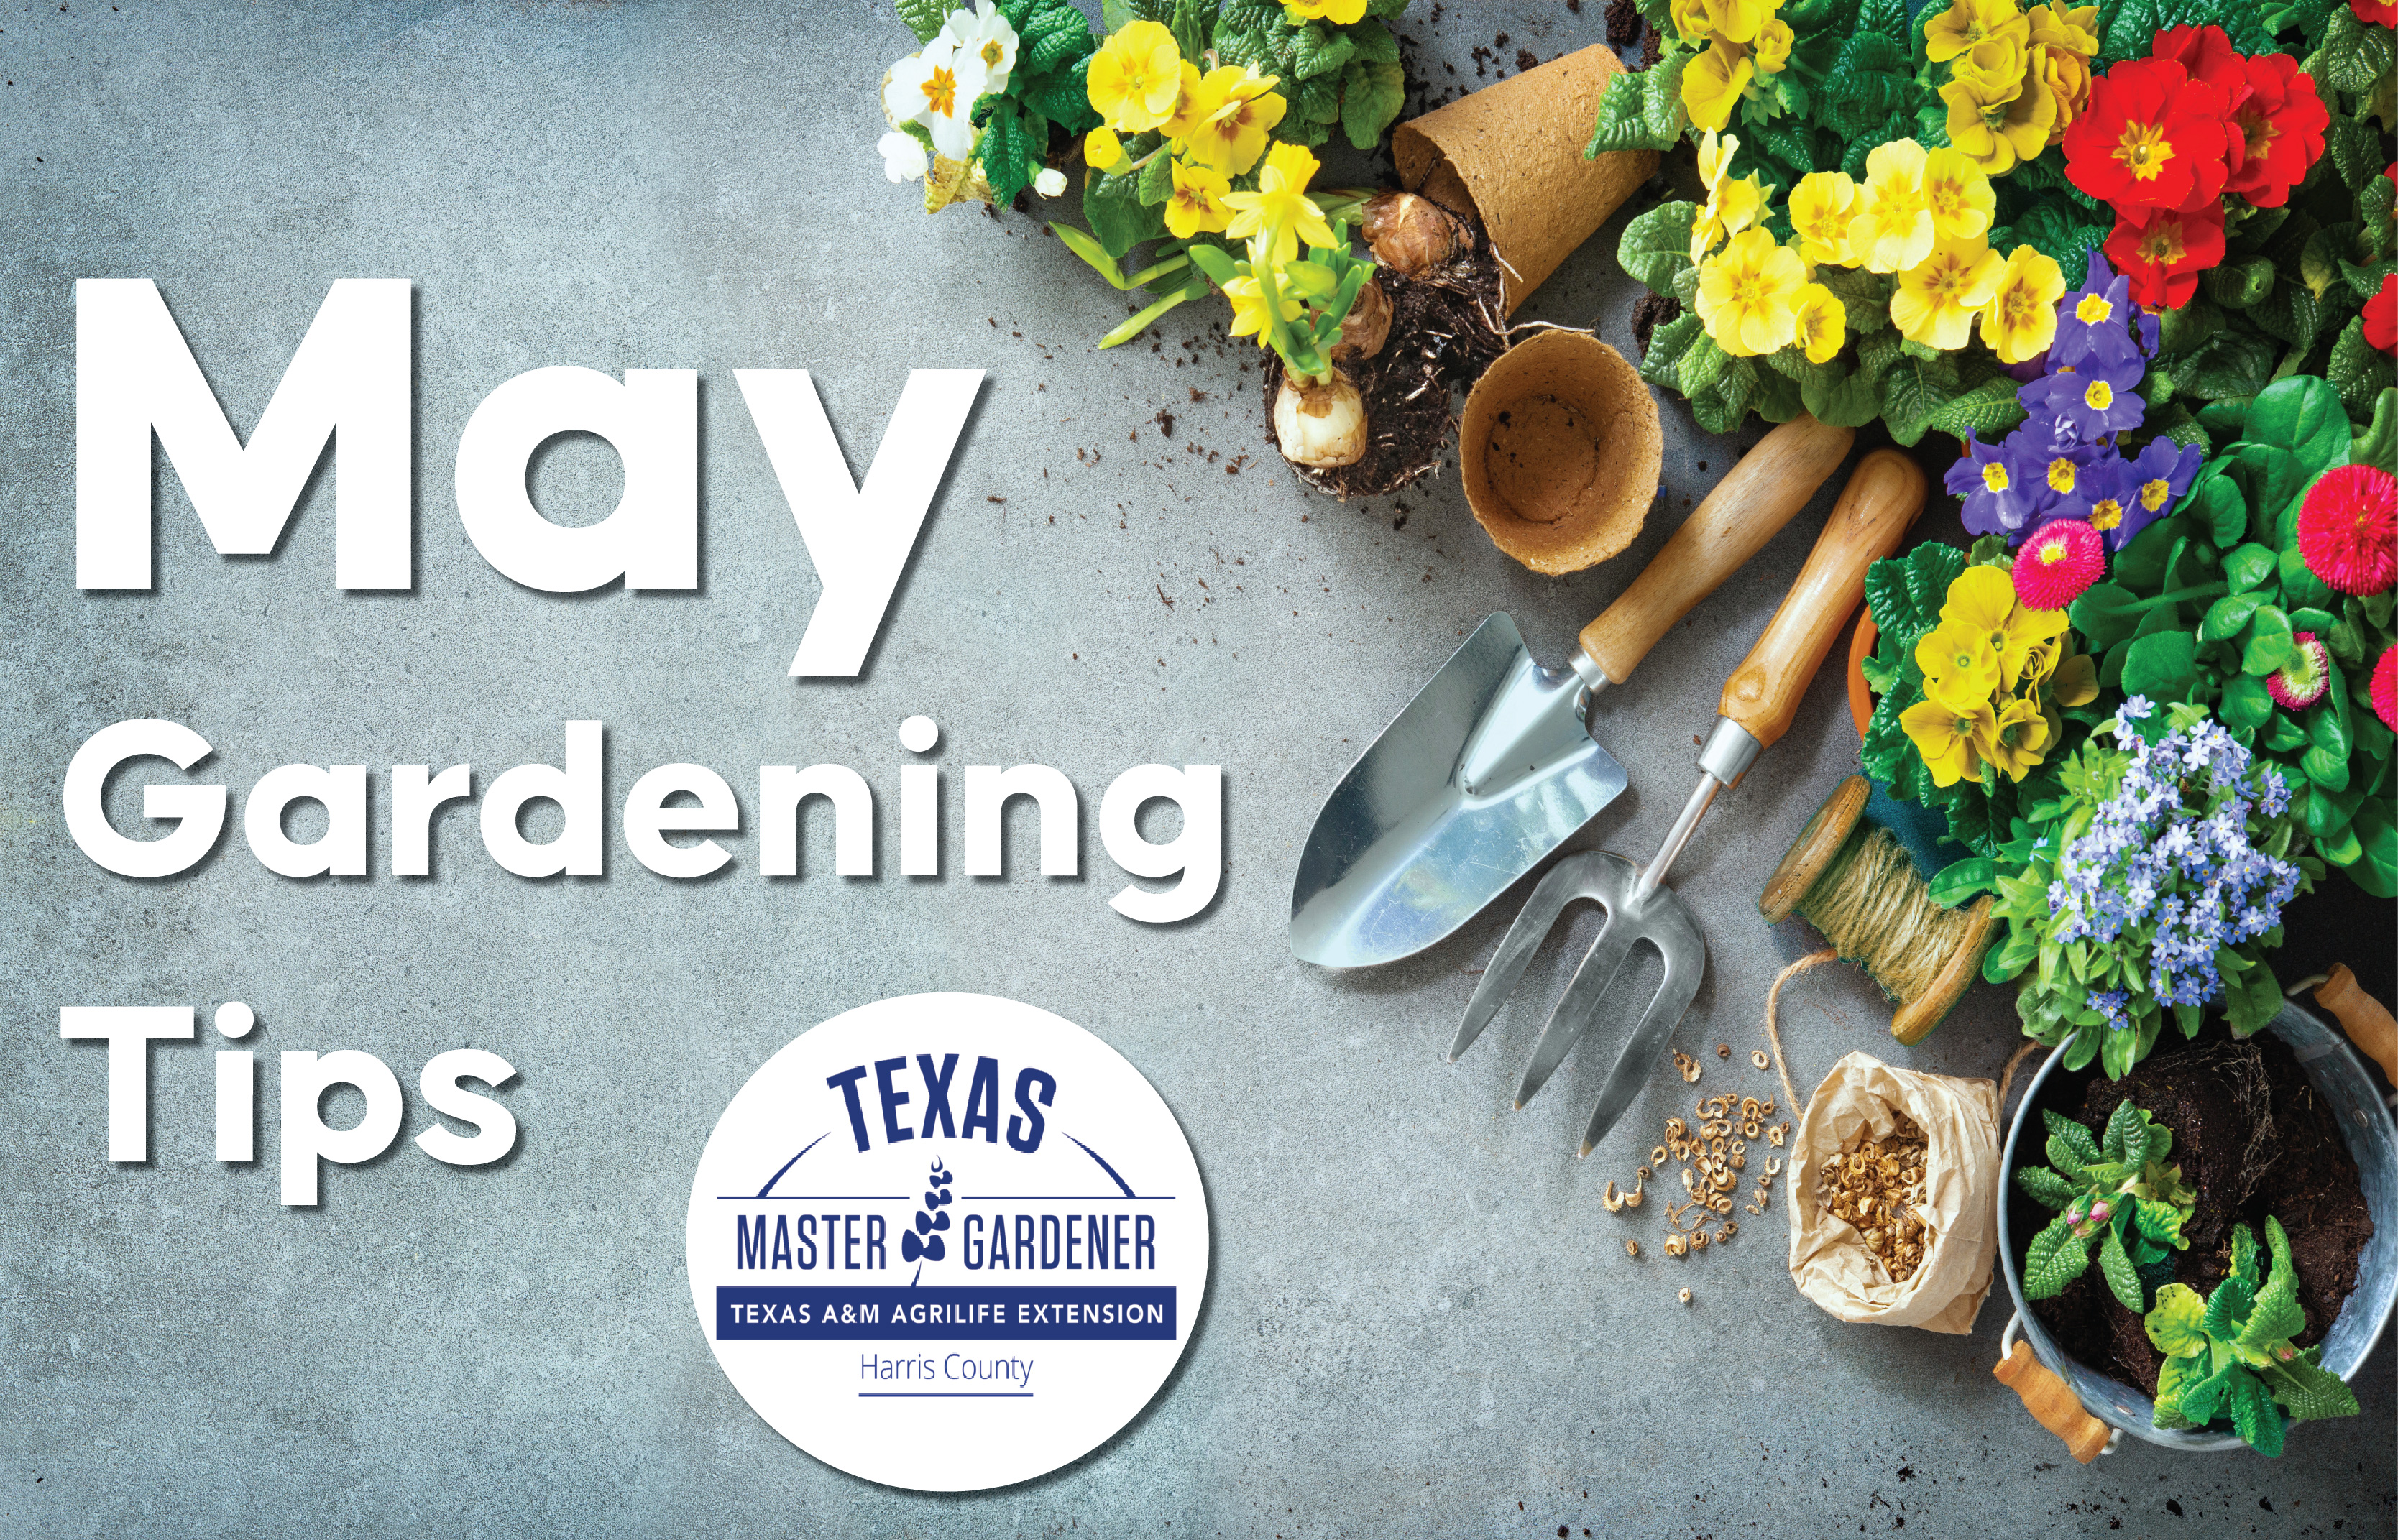 Harris County Master Gardener Shares Top Gardening Tips for May